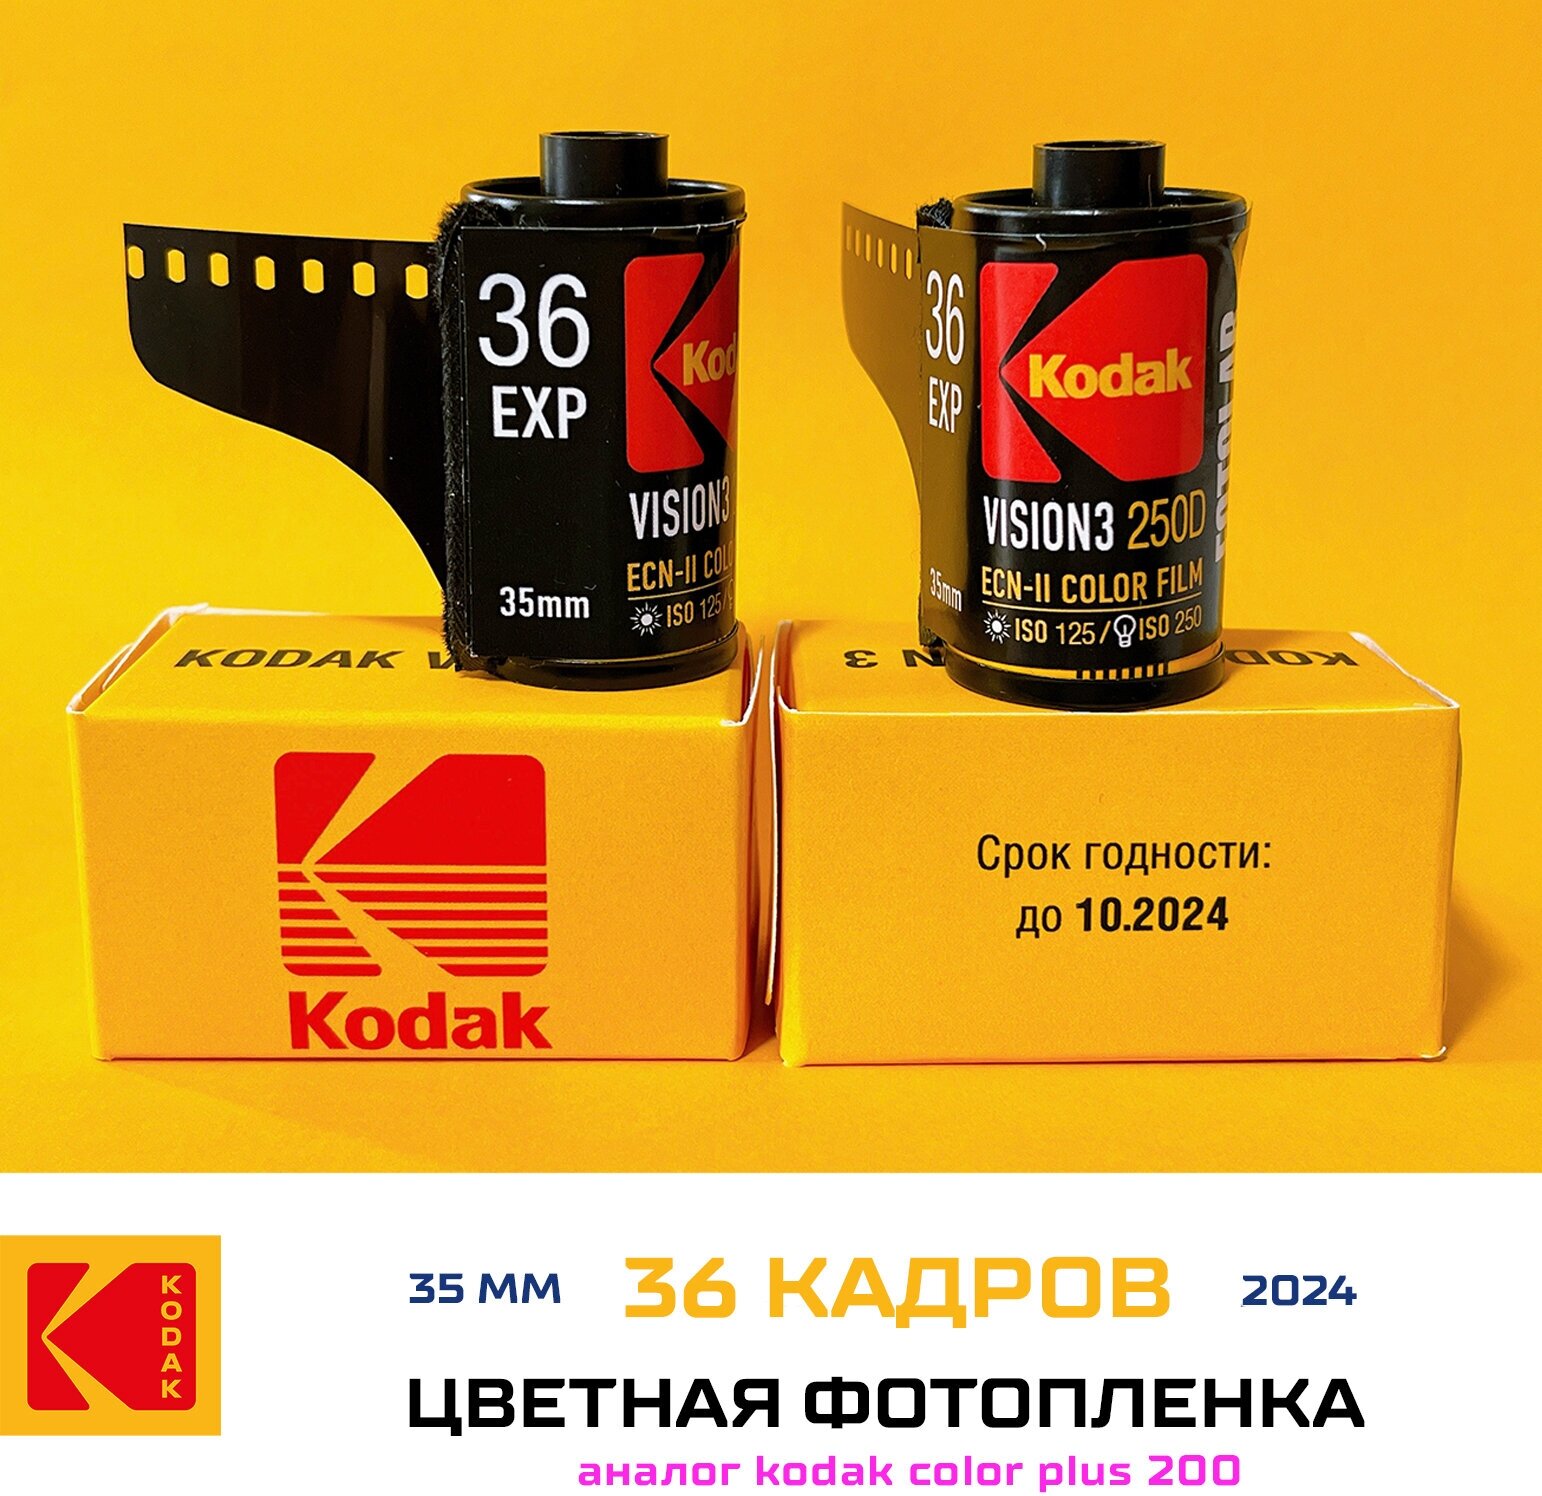 Цветная фотопленка кадров Kodak vision 250D / 36 кадров